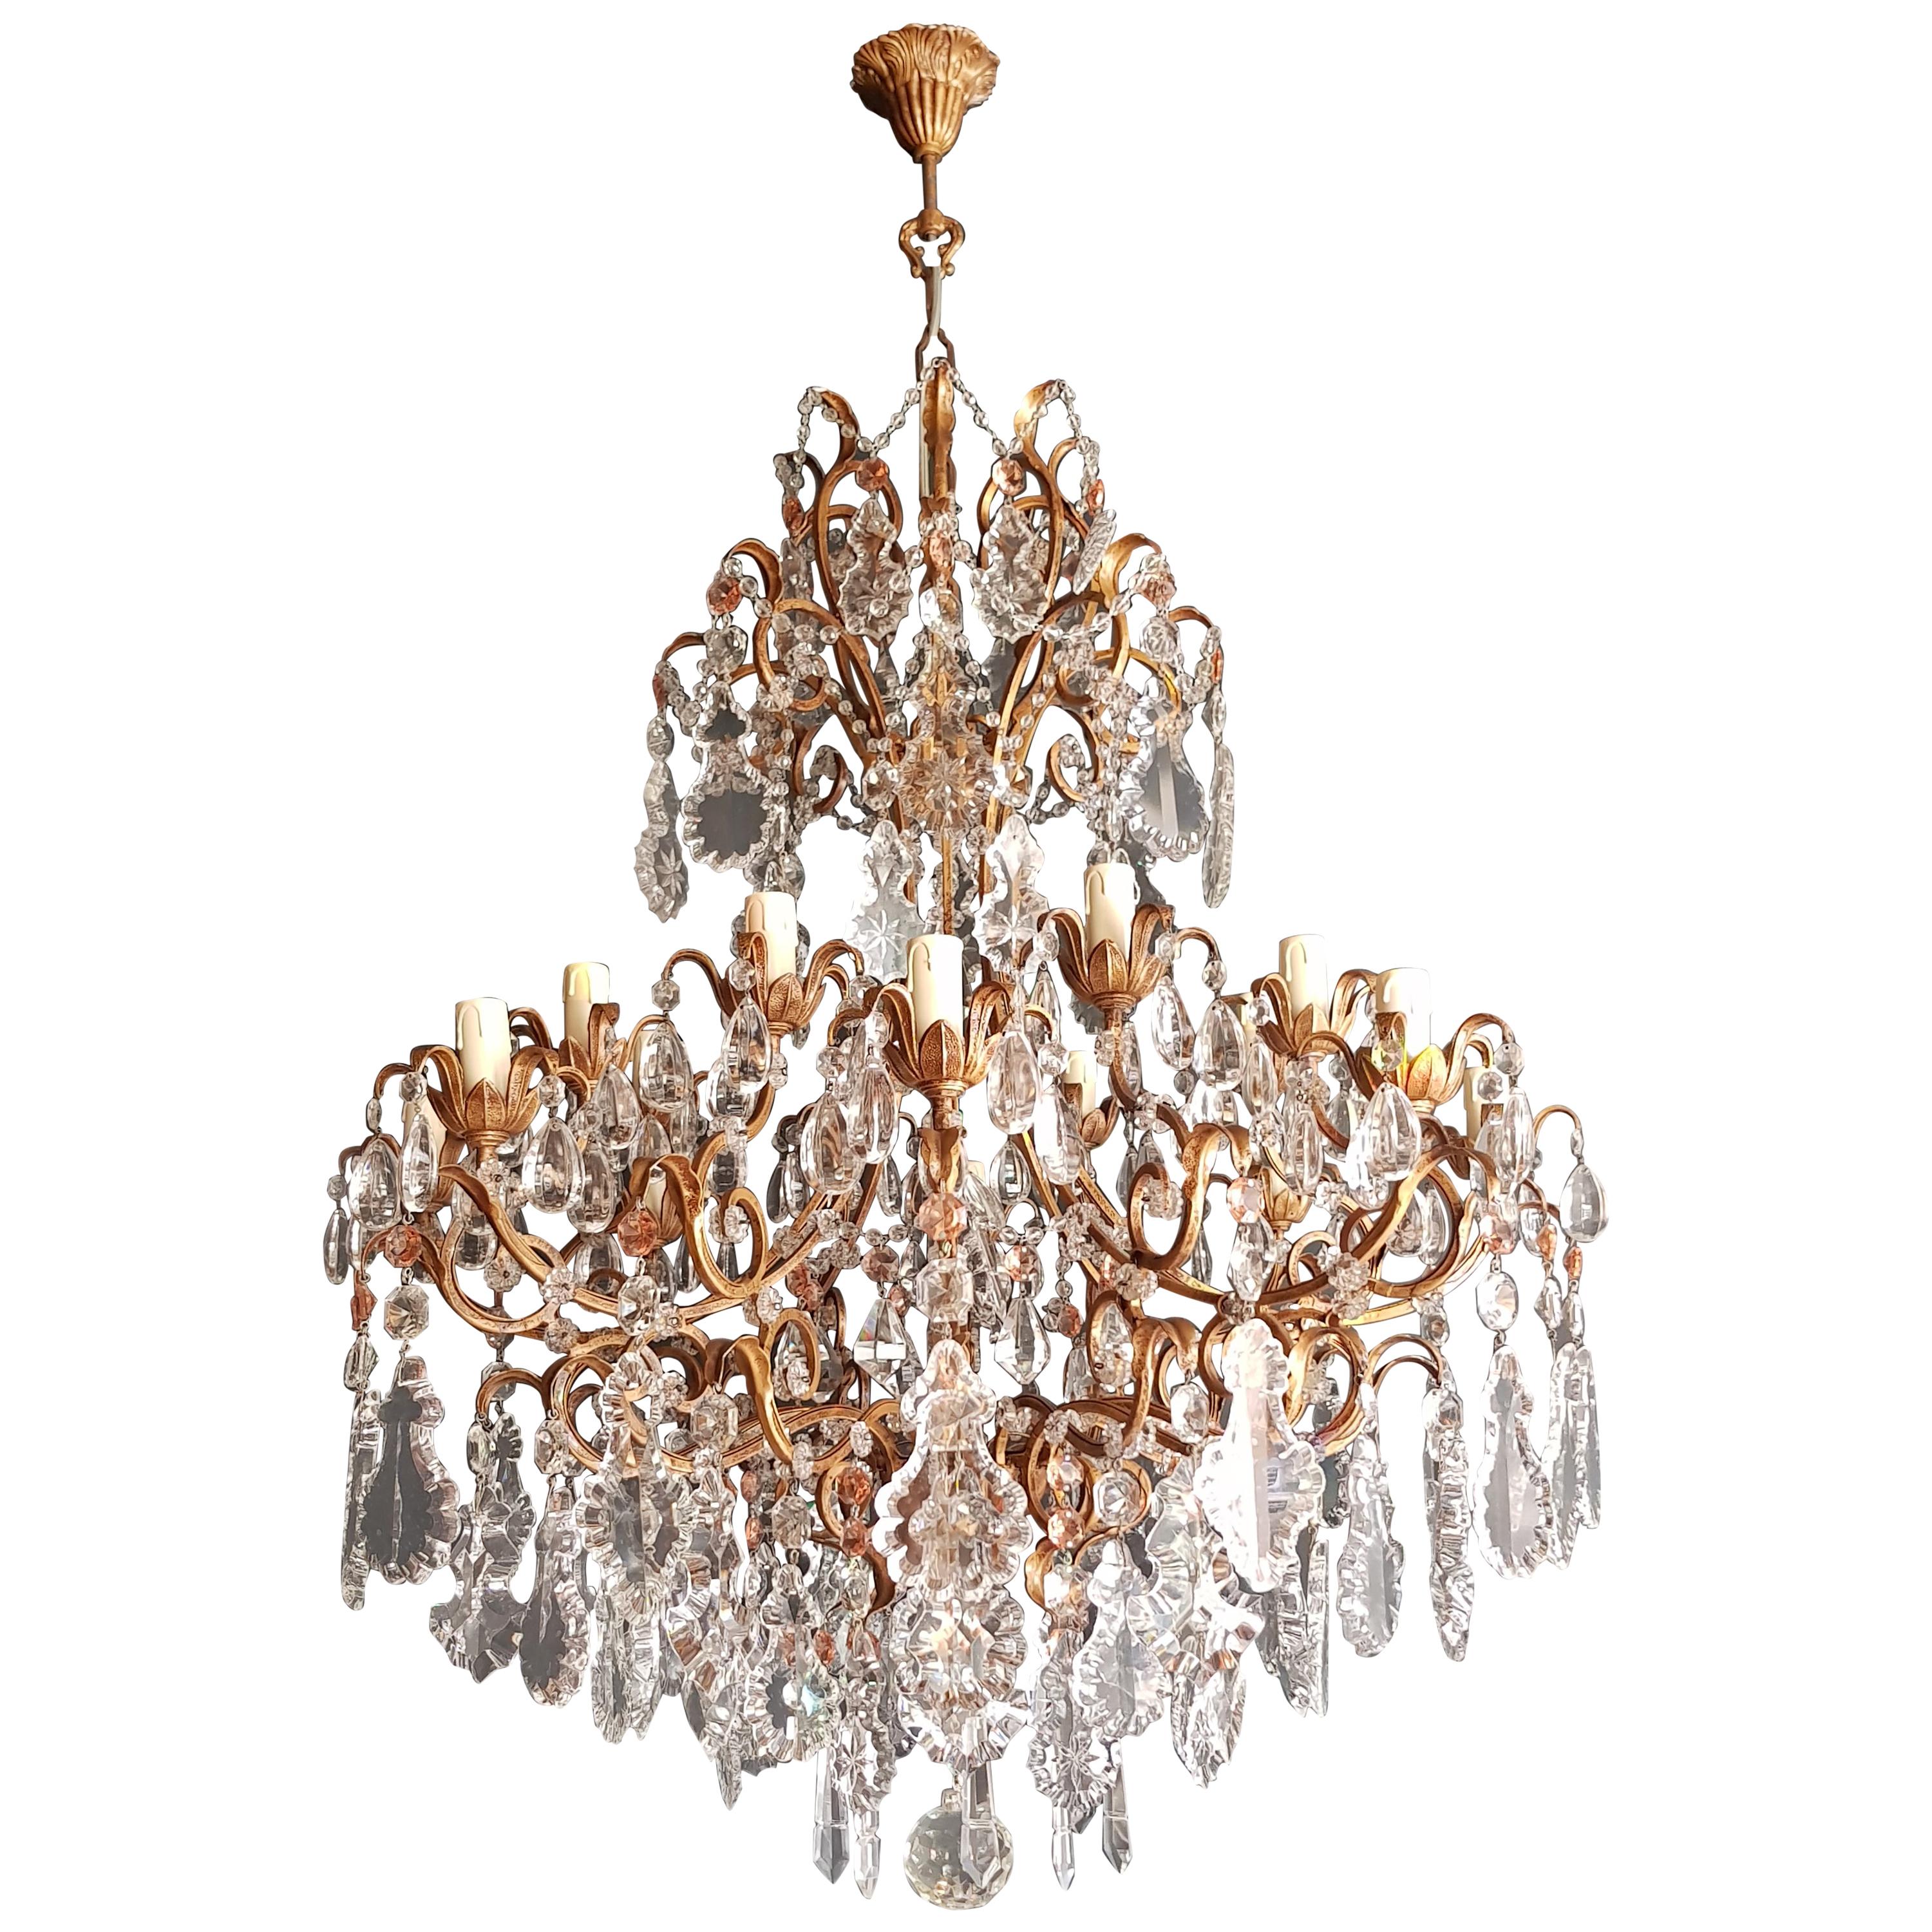 Beaded Crystal Chandelier Antique Ceiling Lamp Florentiner Lustre Art Nouveau